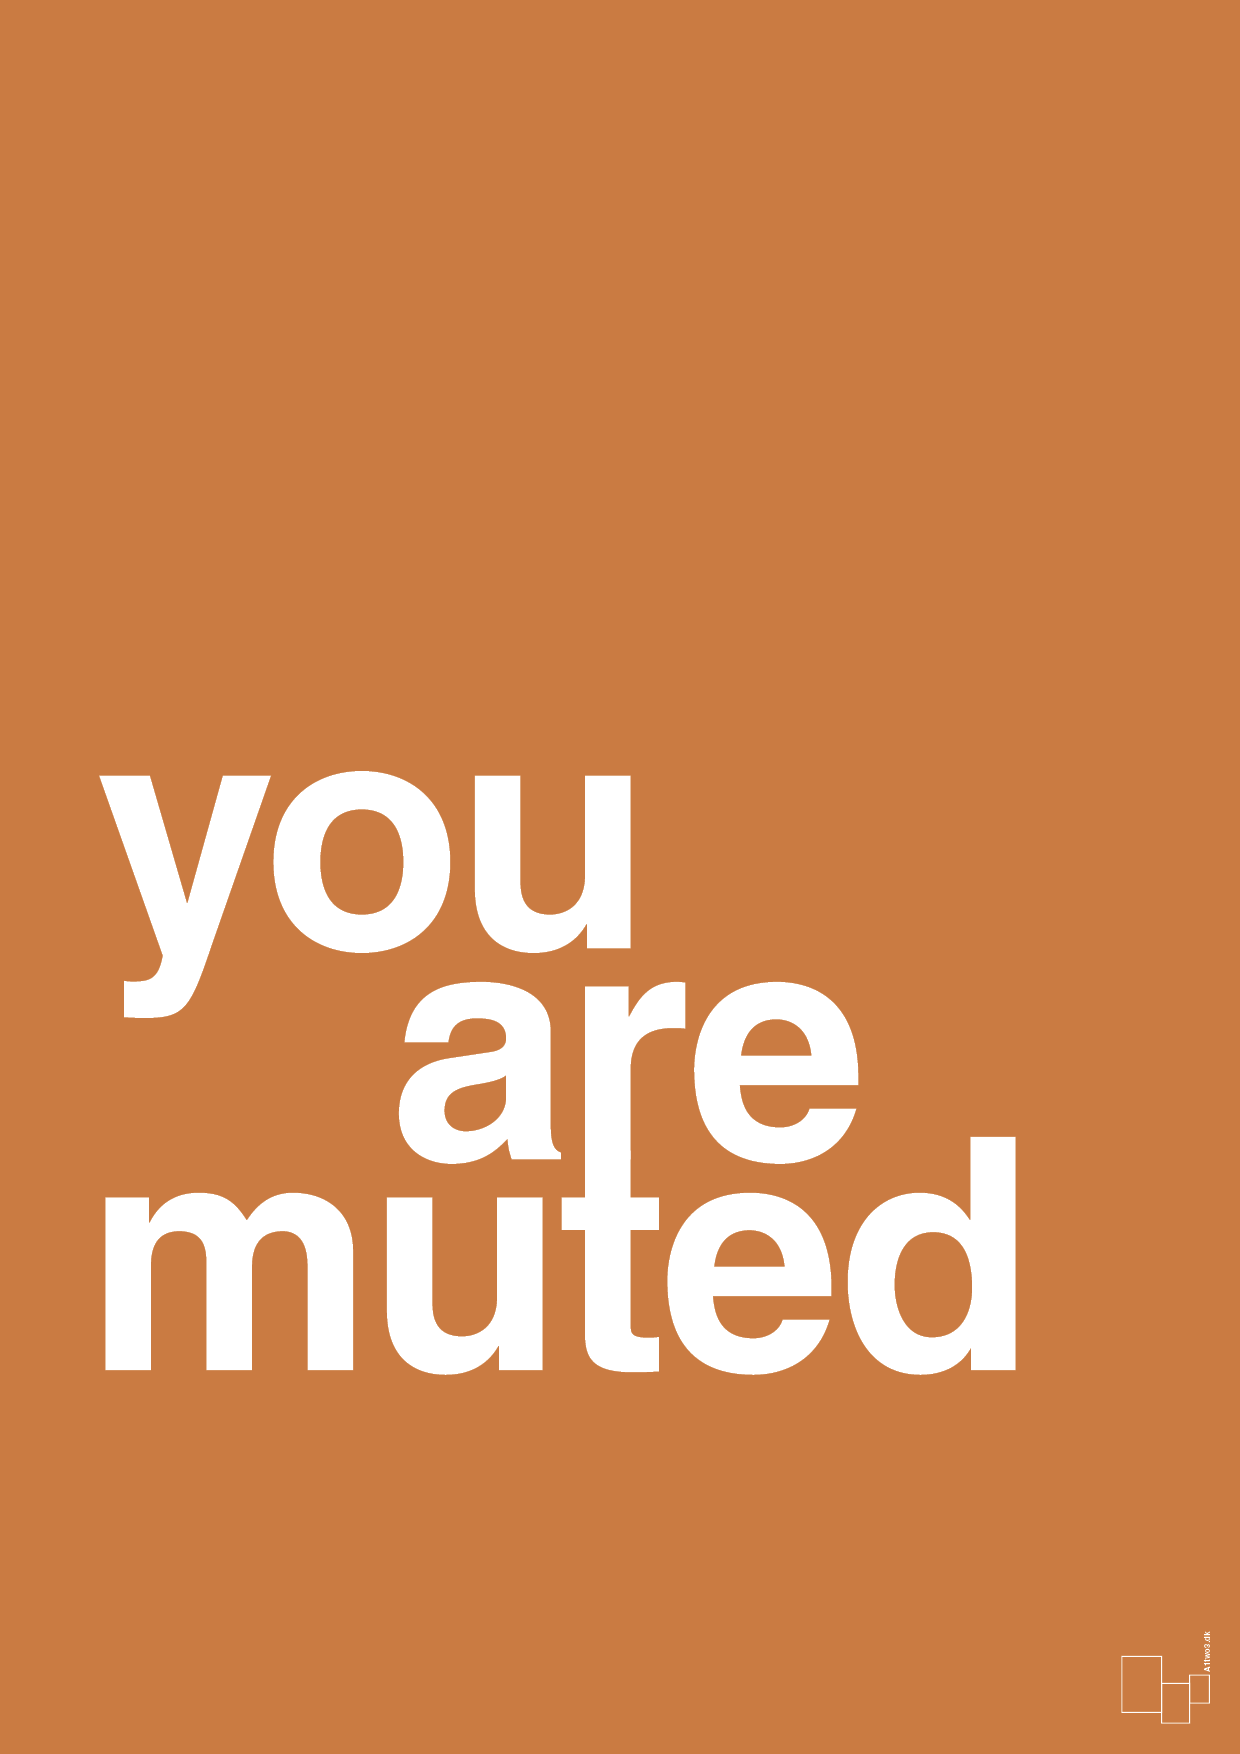 you are muted - Plakat med Ordsprog i Rumba Orange